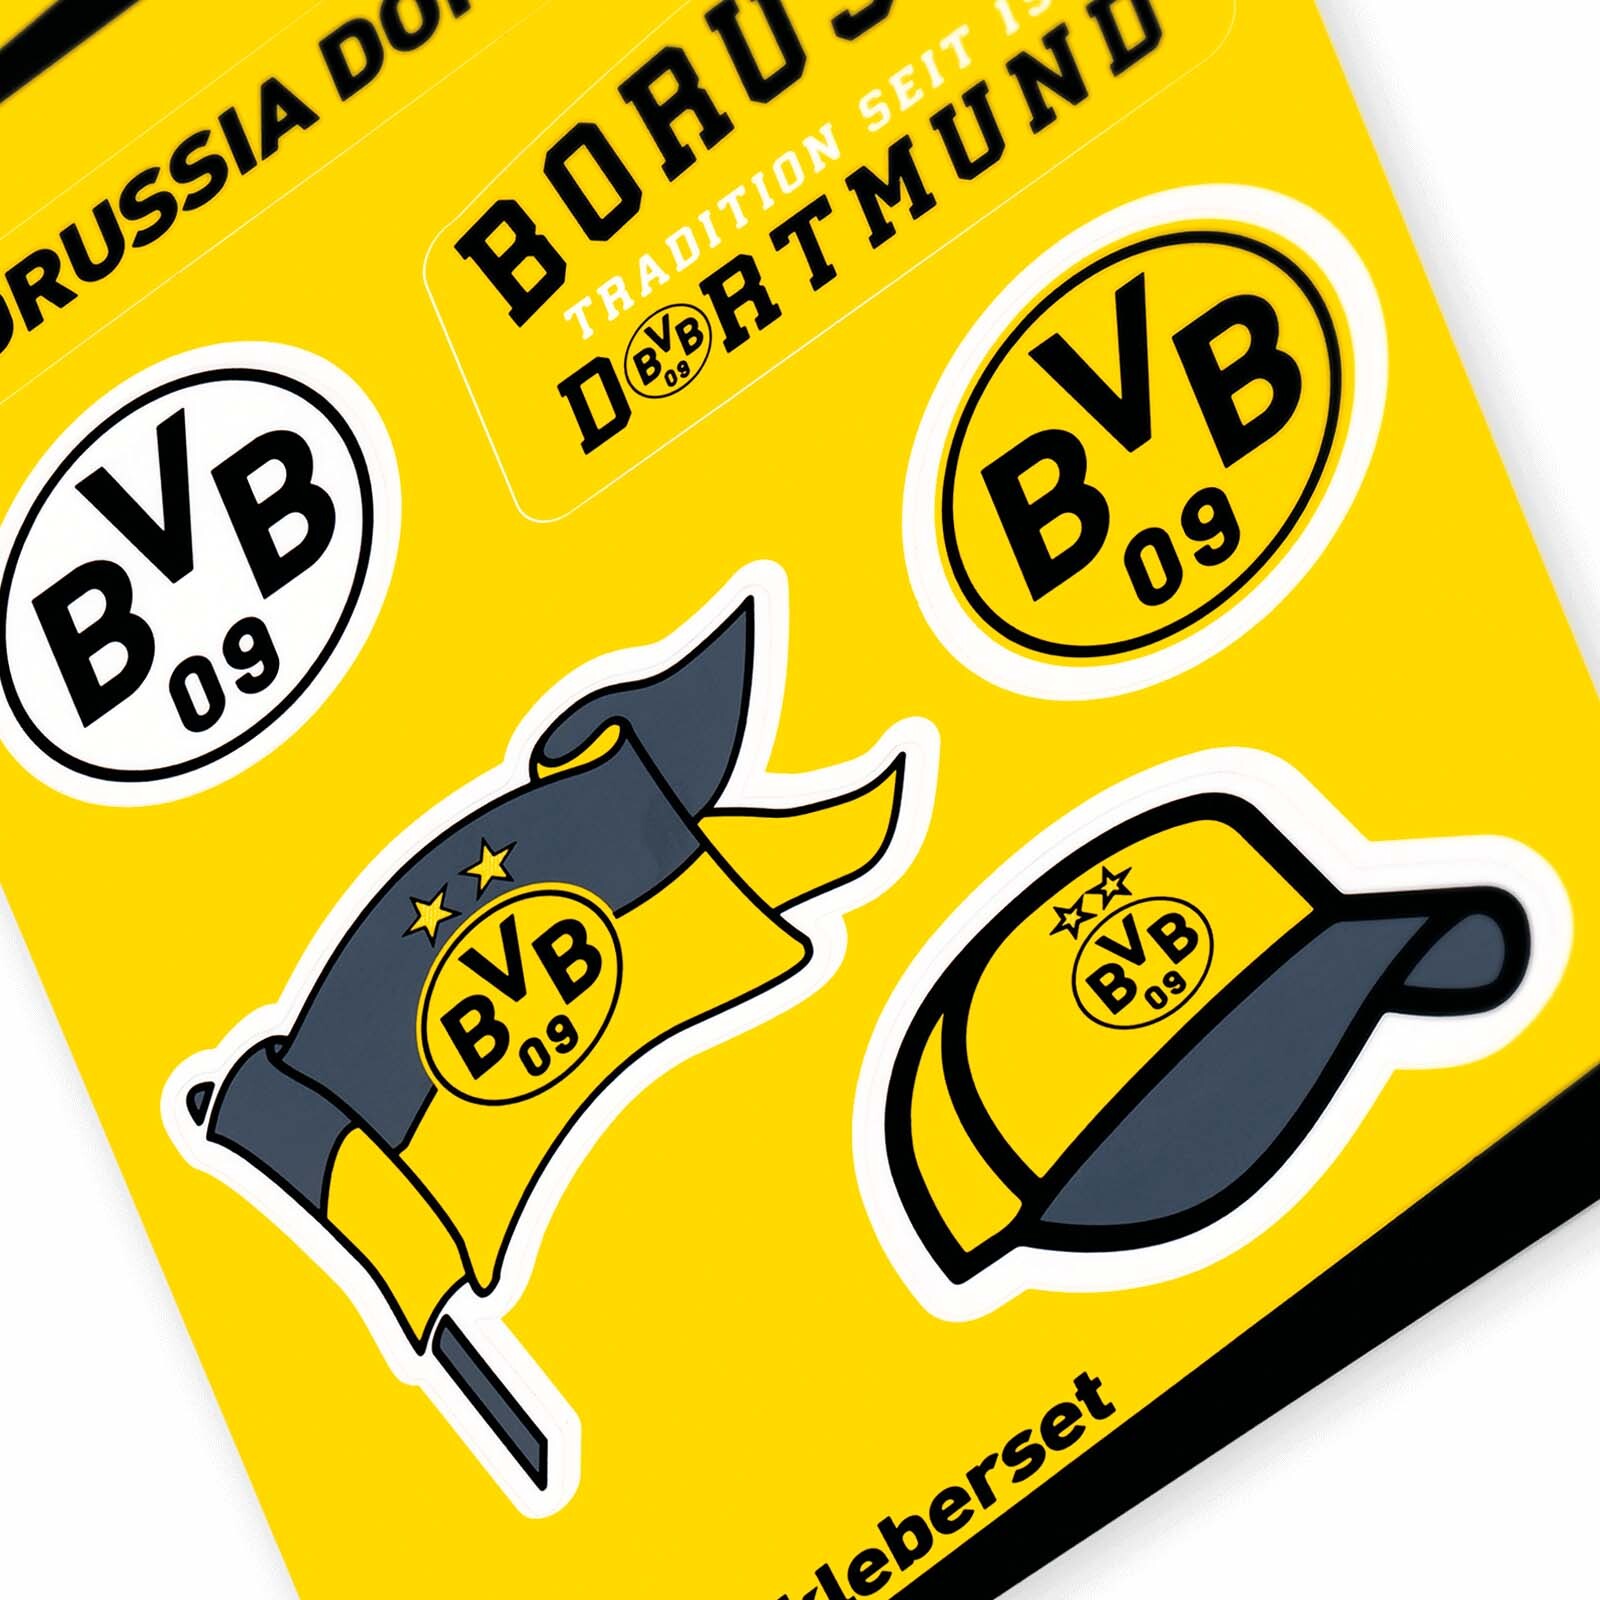 BVB Sticker Card Basic, Car, Souvenirs